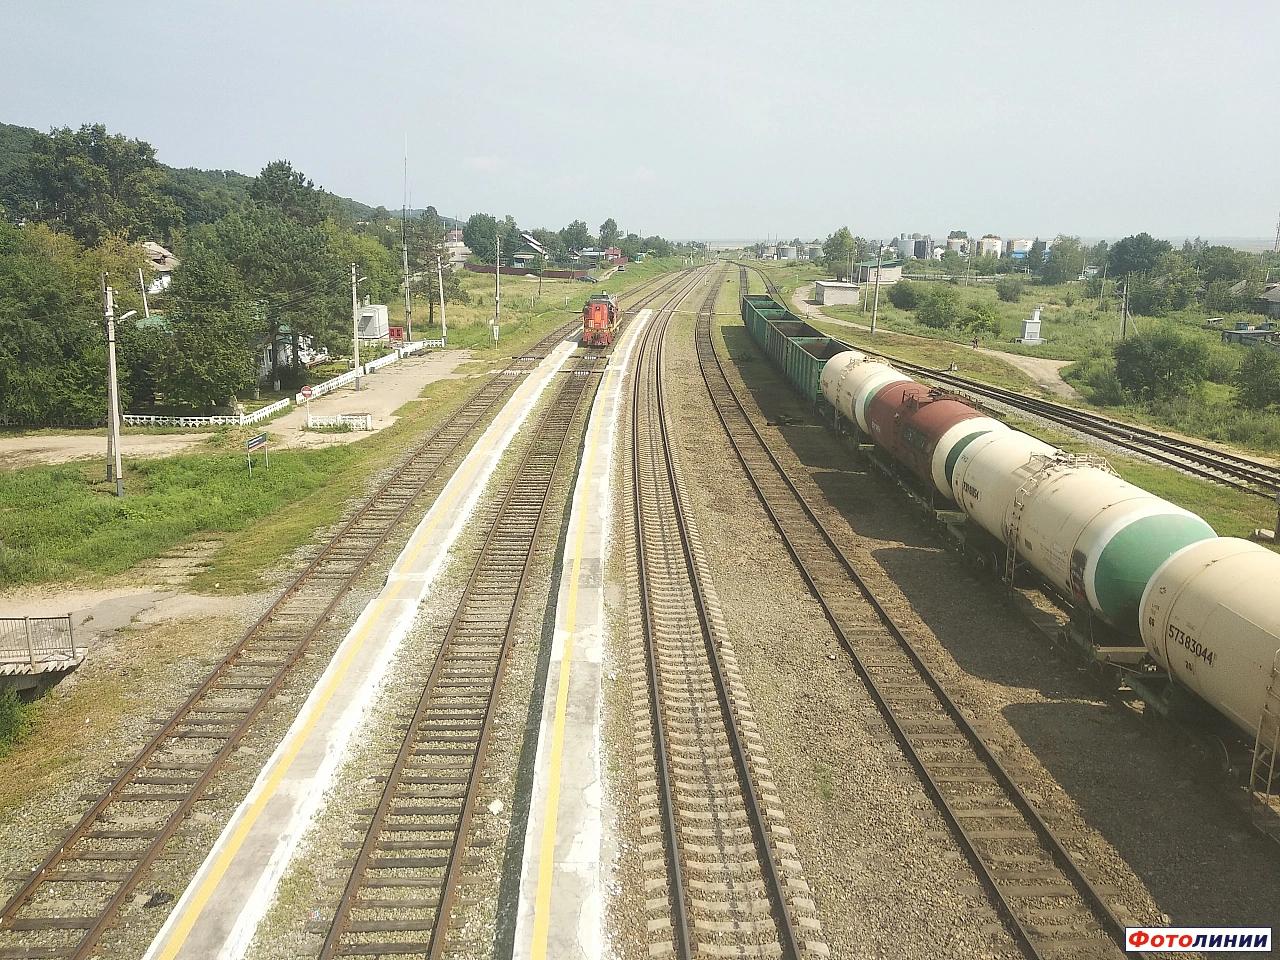 Вид в сторону станции Белогорск, на фото локомотив ТЭМ18дм-1285